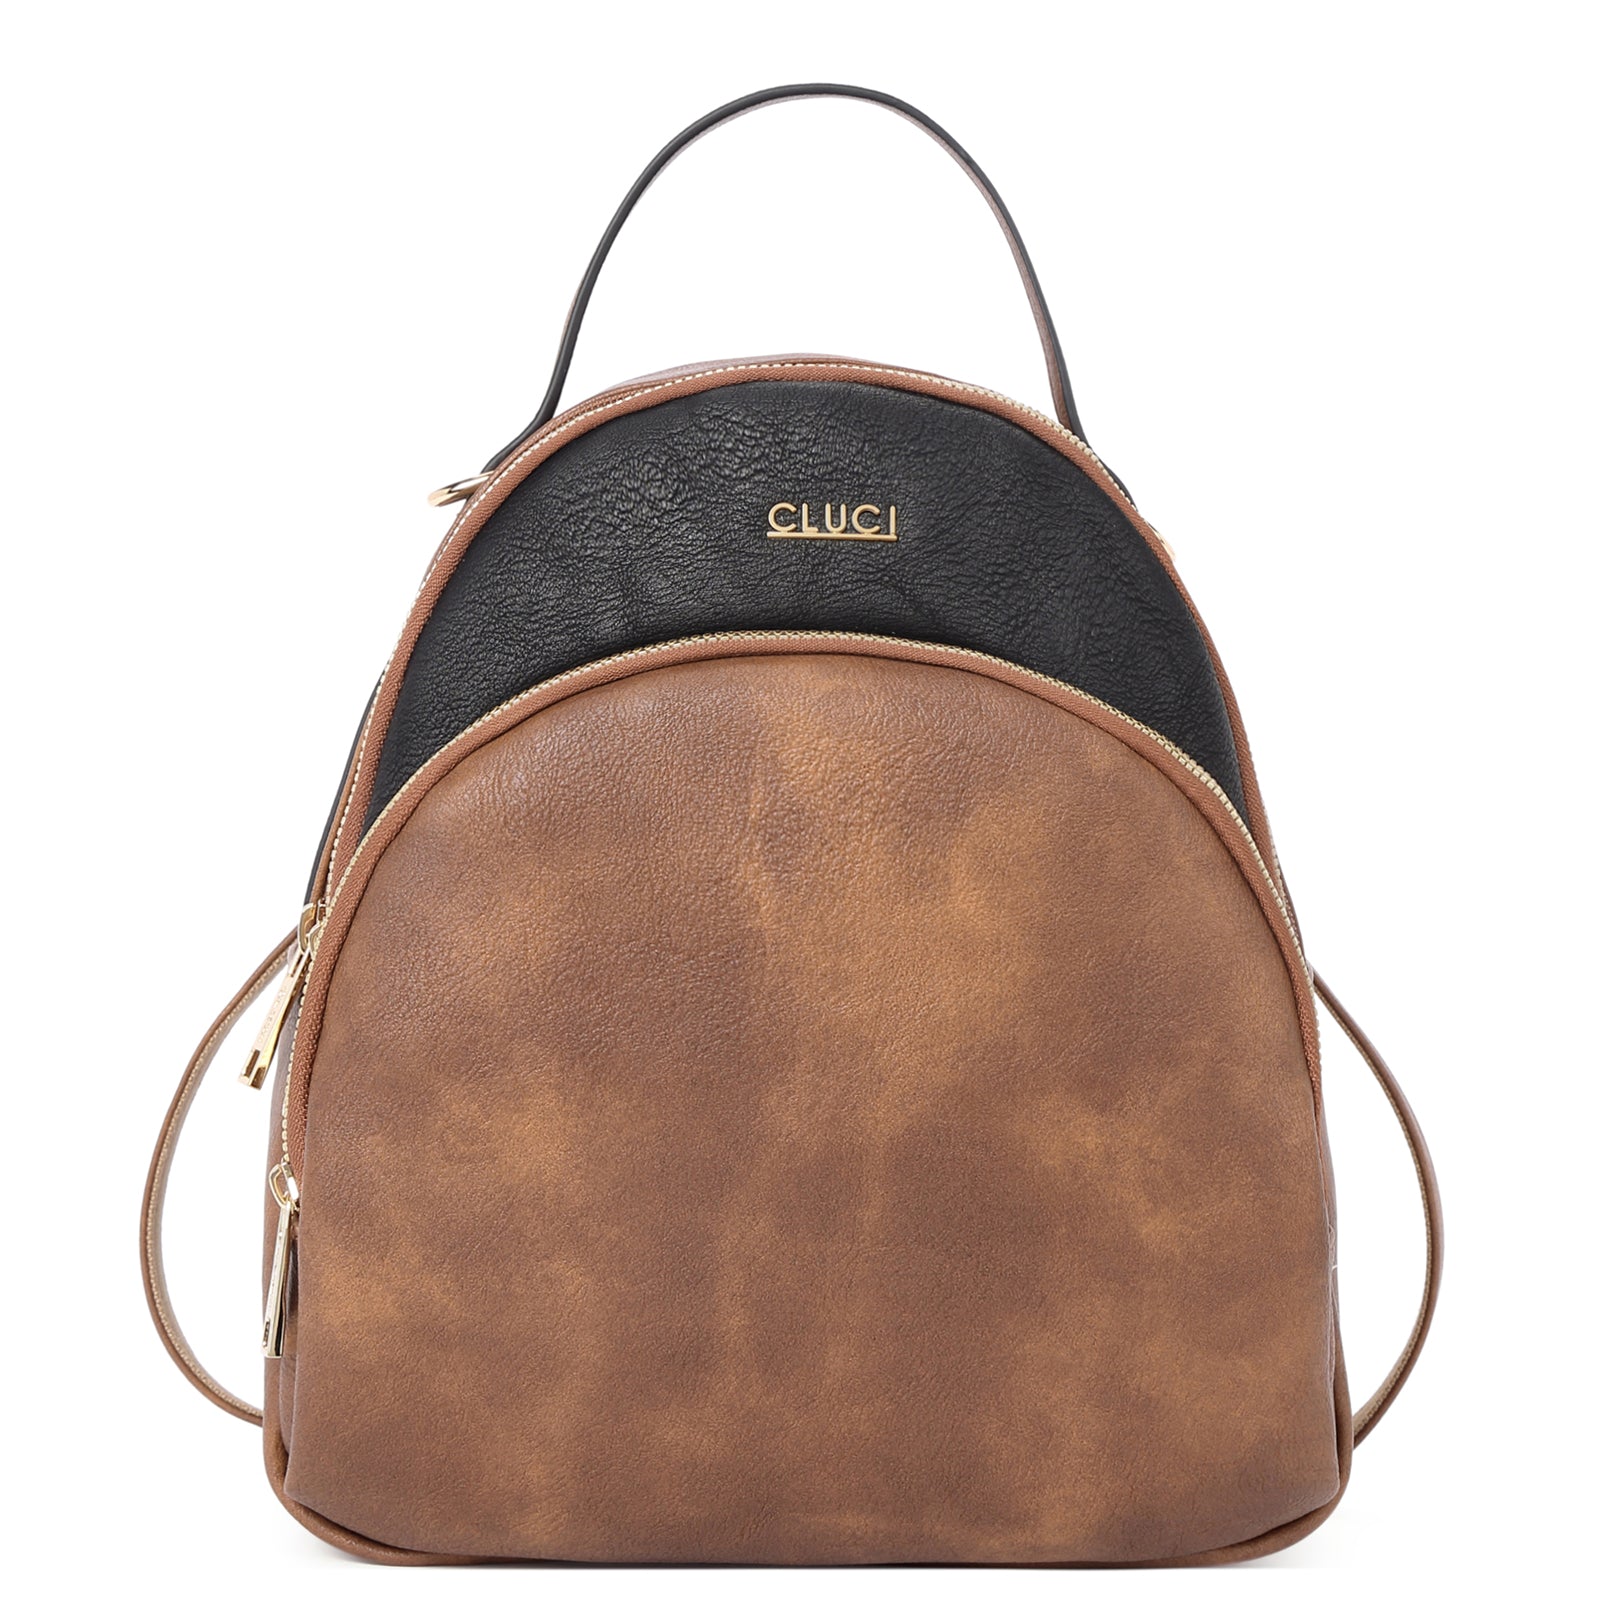 Chanel Trendy CC Bag Review | Helpful Tips | Brooklyn Blonde